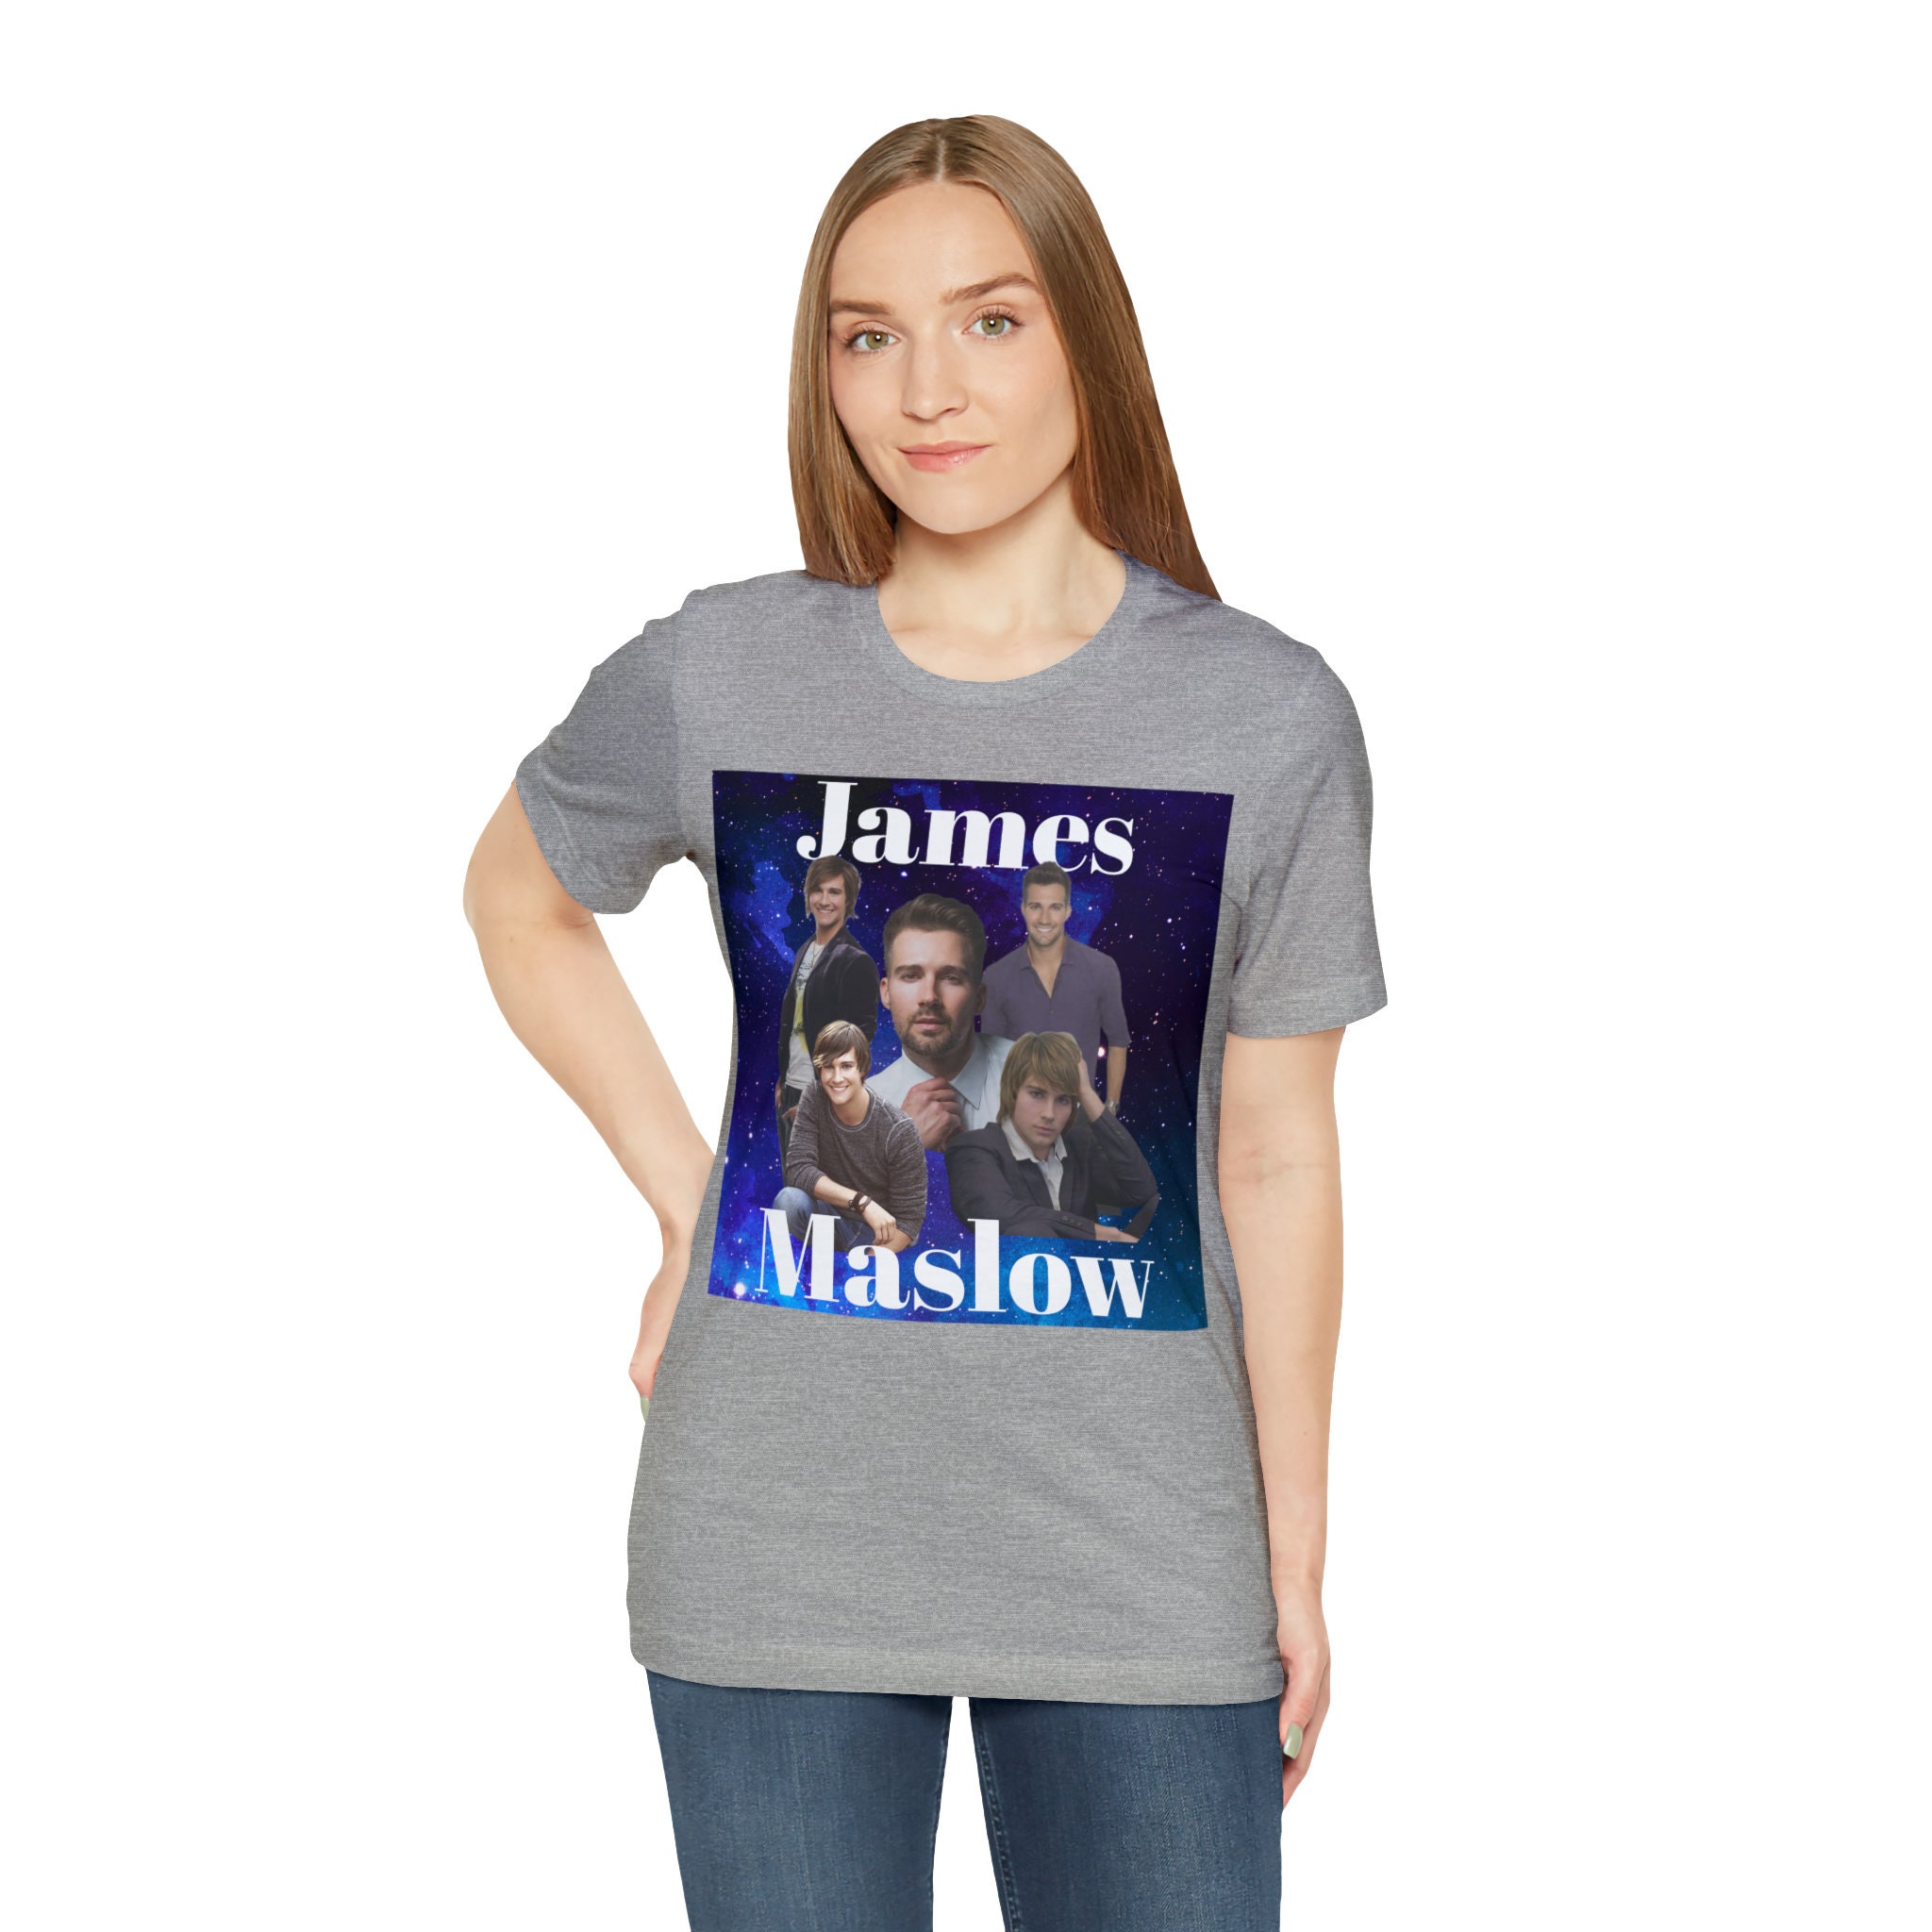 James Maslow Shirt, Big Time Rush Short Sleeve Unisex T-shirt